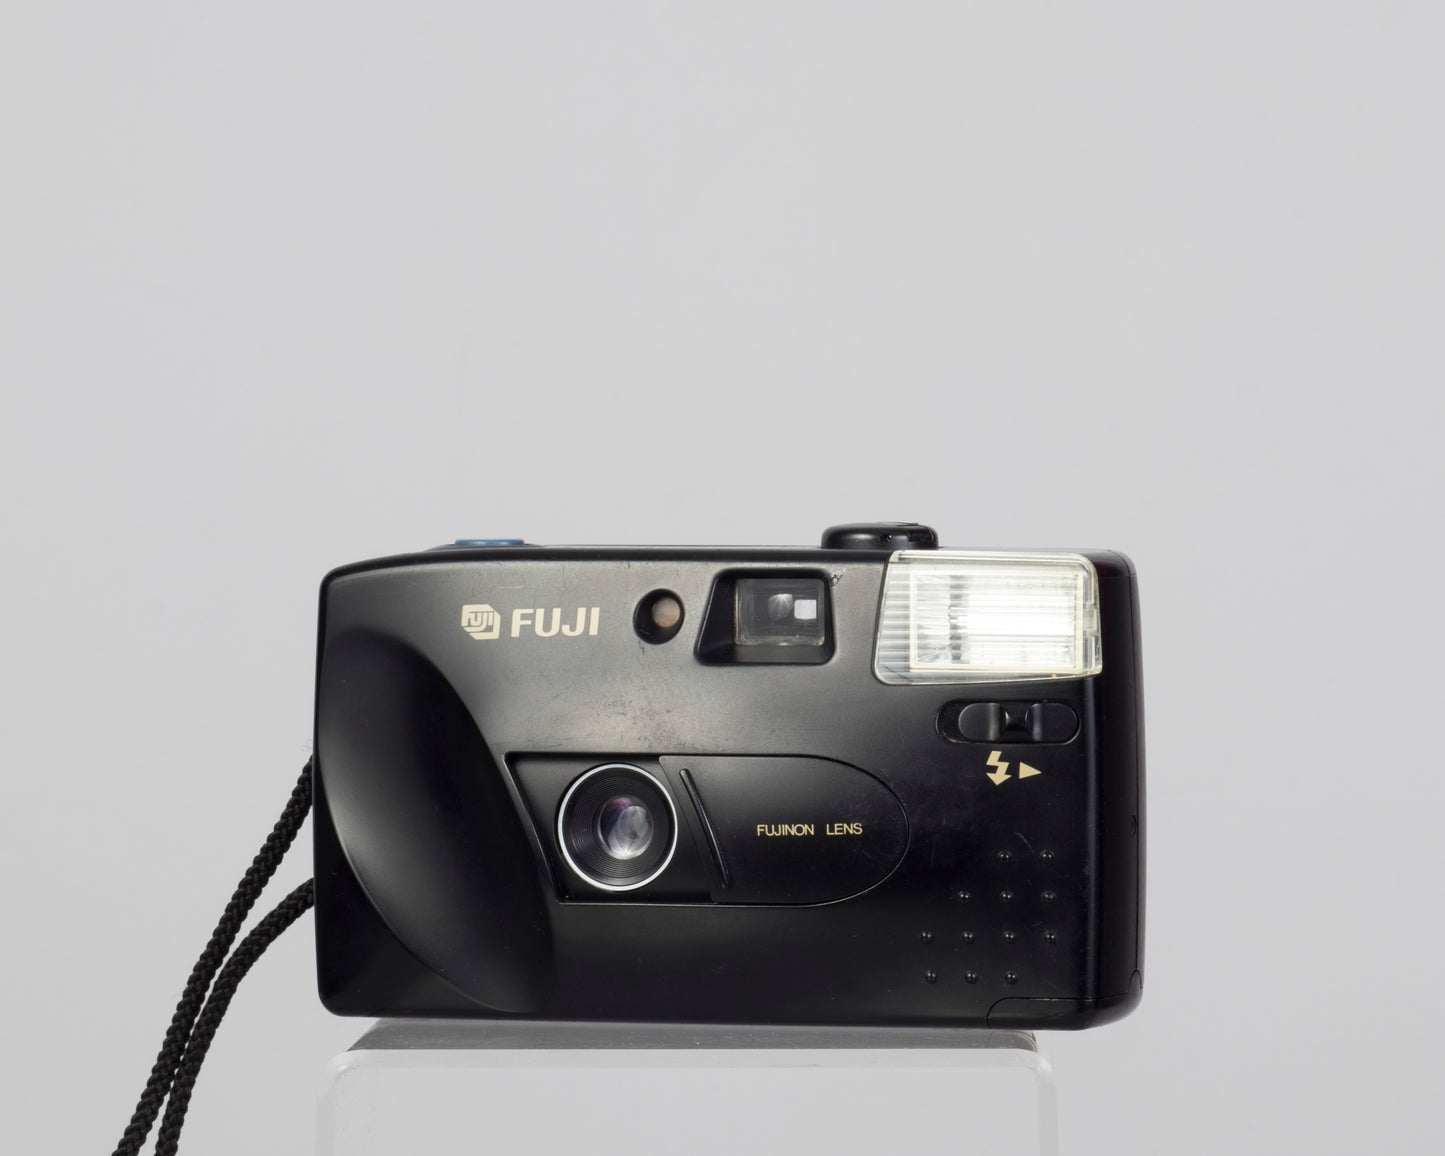 Fuji DL-8 35mm film camera (serial 90237083)